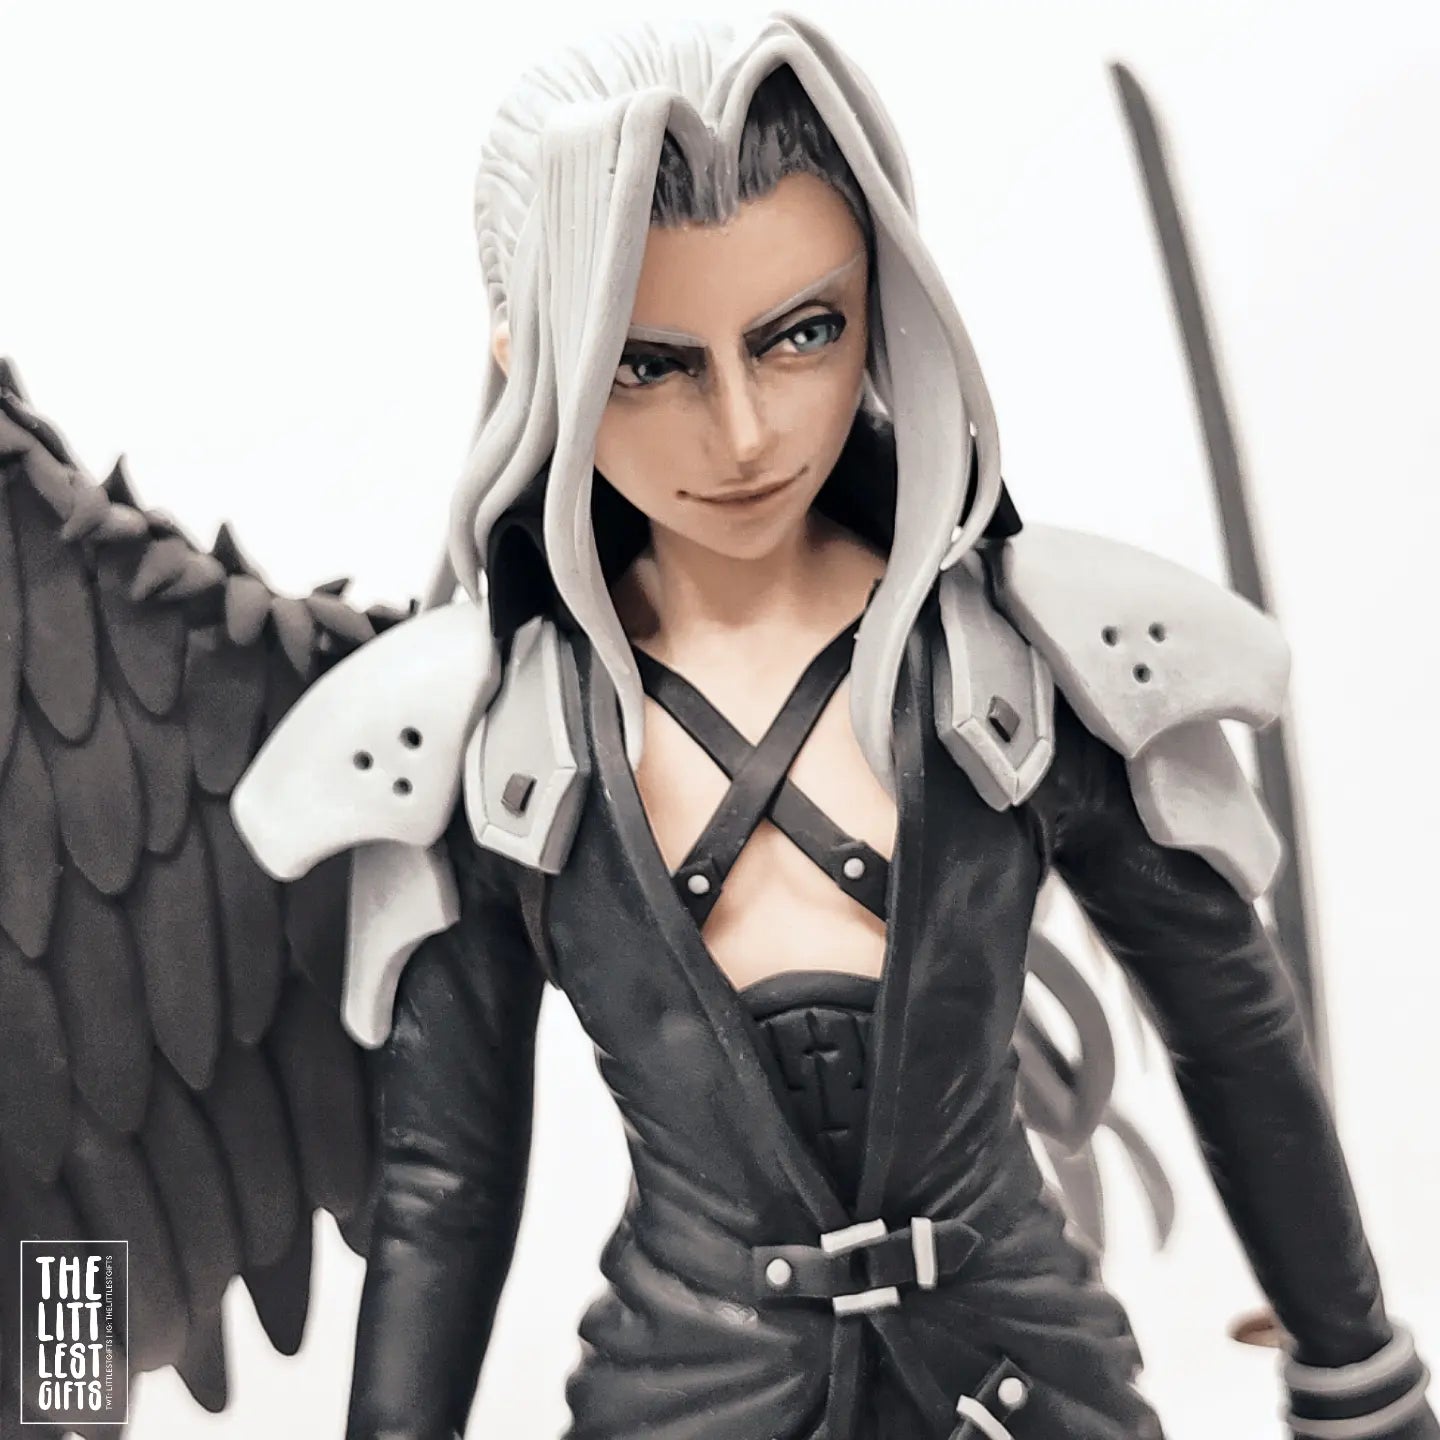 FFVII Sephiroth Fan-made Scale Figure